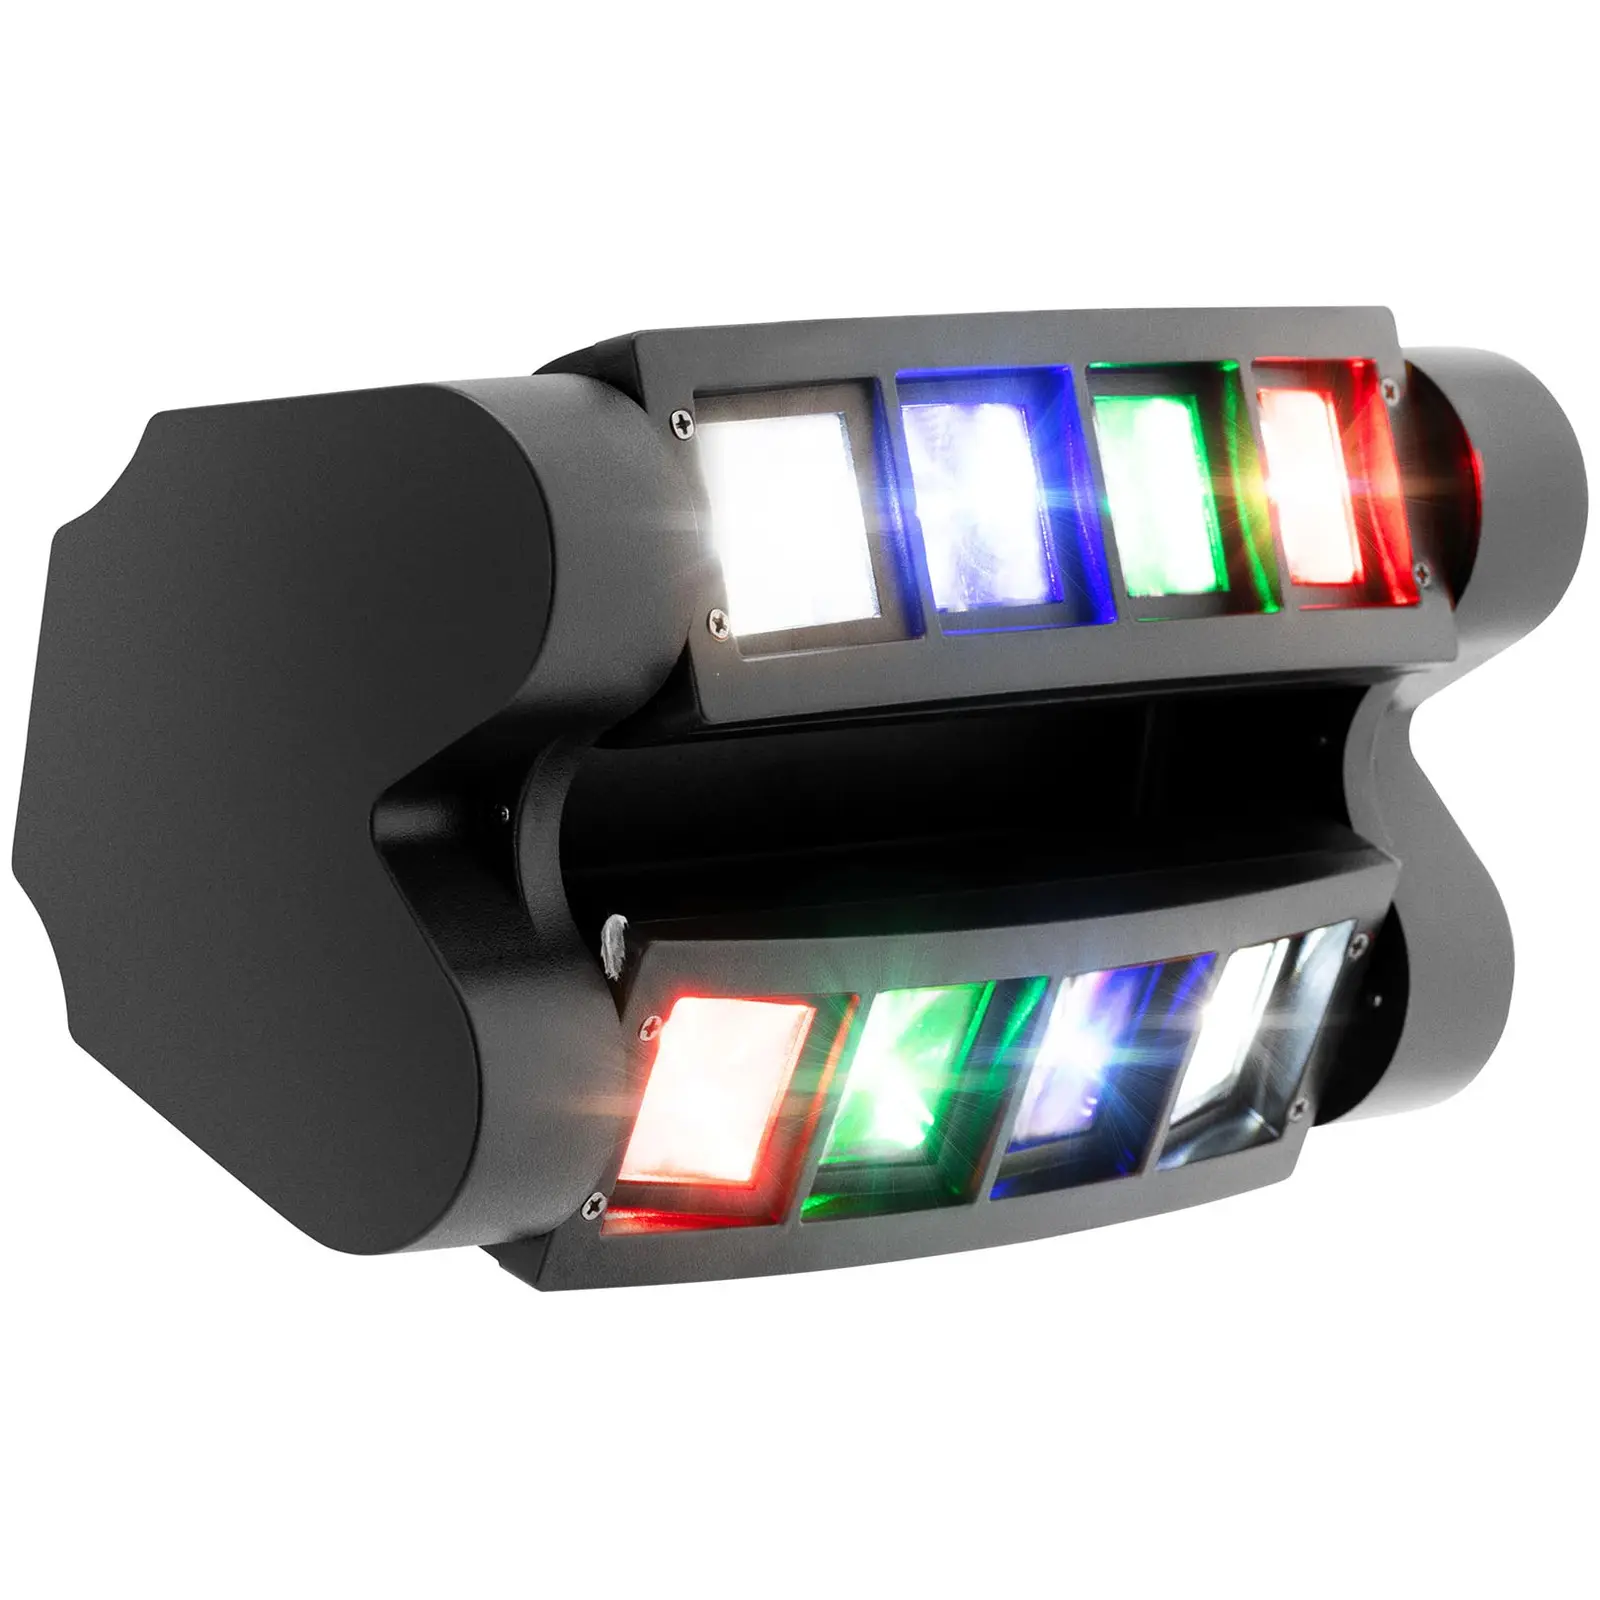 Testa mobile LED - 8 LED - 27 W - RGBW